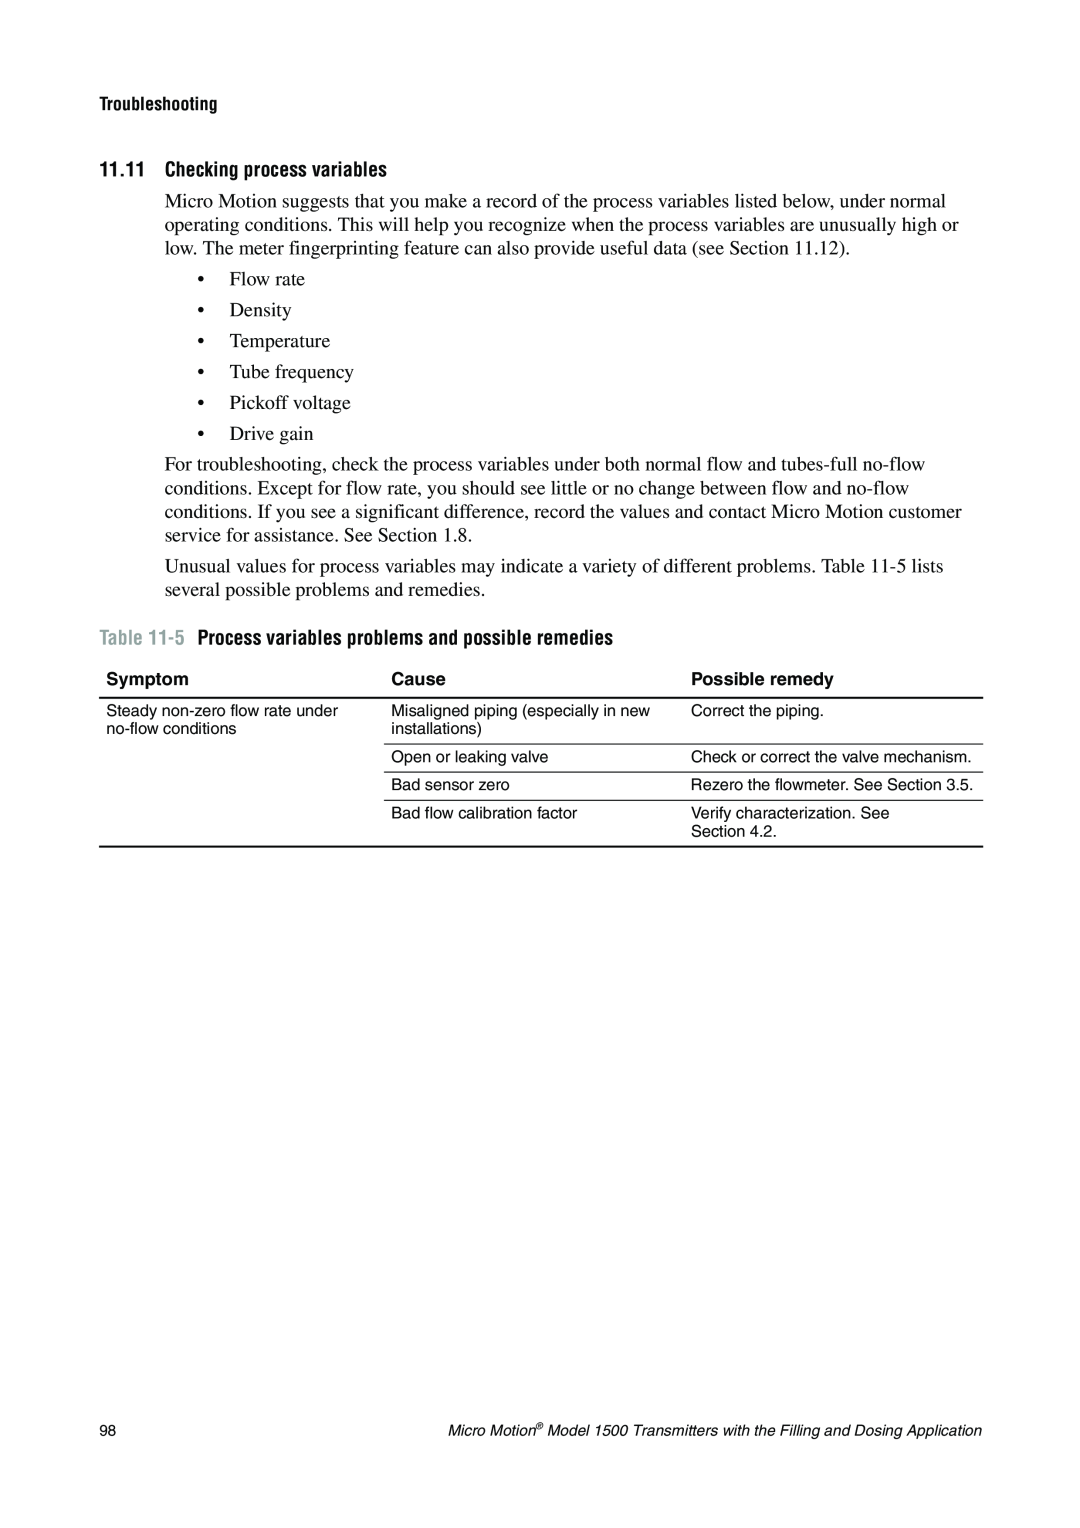 Emerson Process Management 1500 manual 11.11Checking process variables 